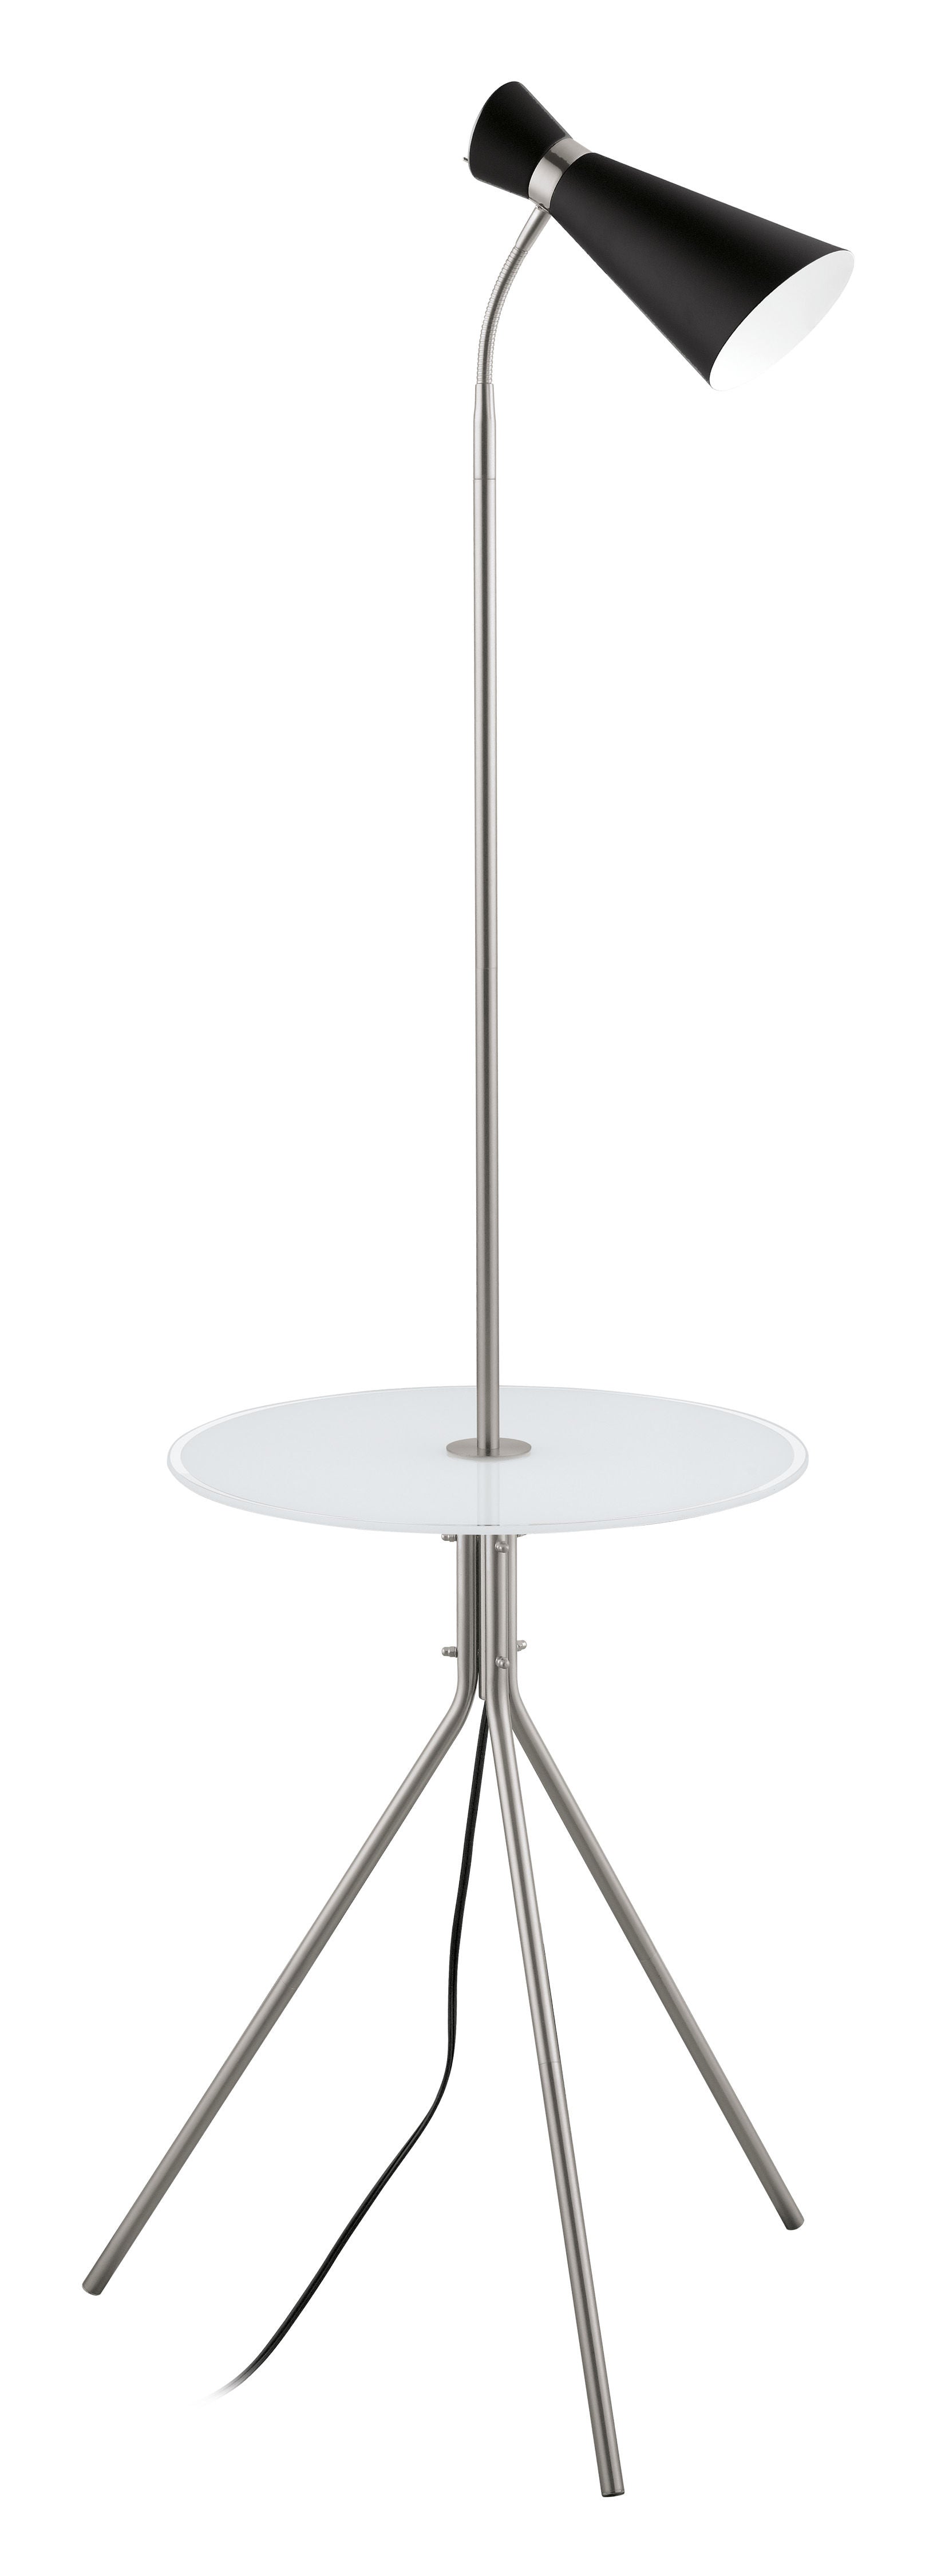 Policara Floor lamp Stainless steel - 203648A | EGLO